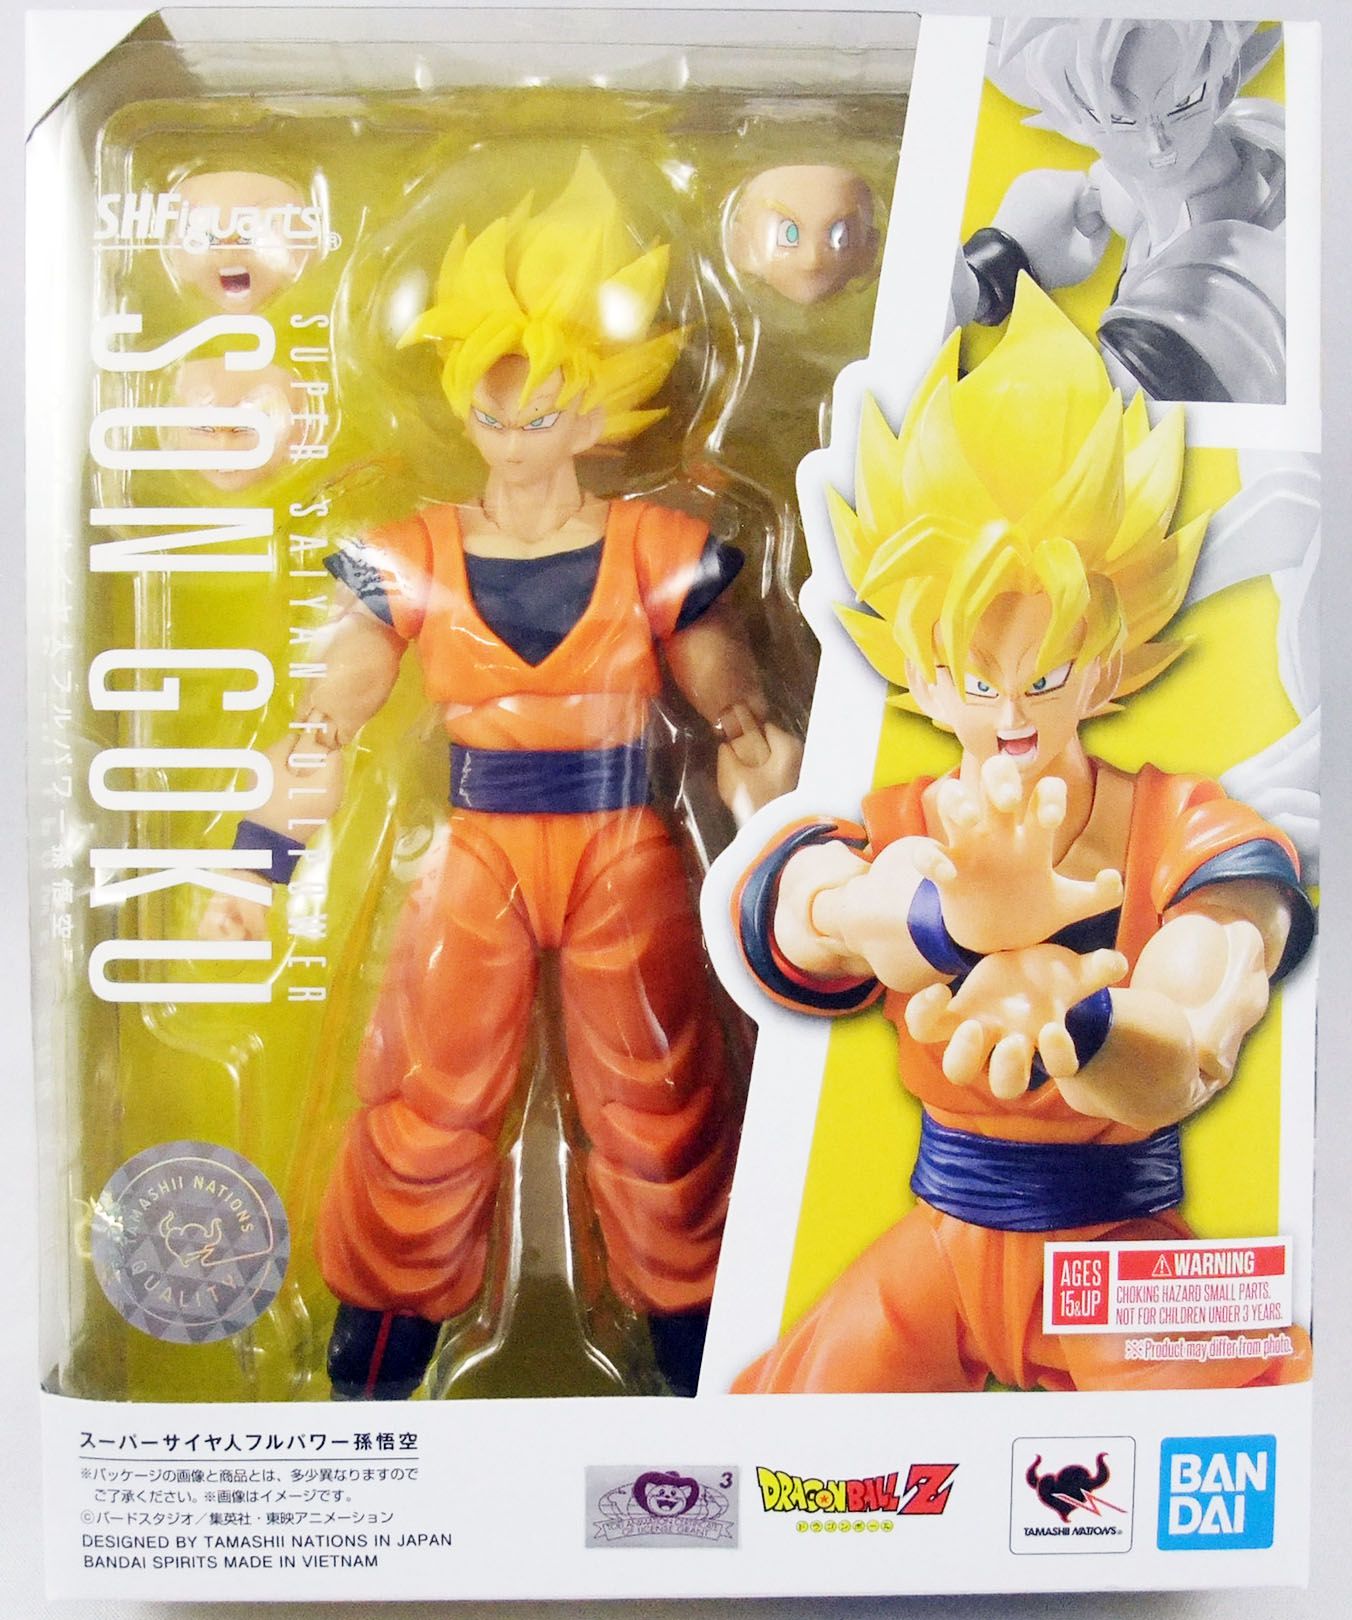 Bandai Tamashii Nations SH Figuarts Goku Action Figure